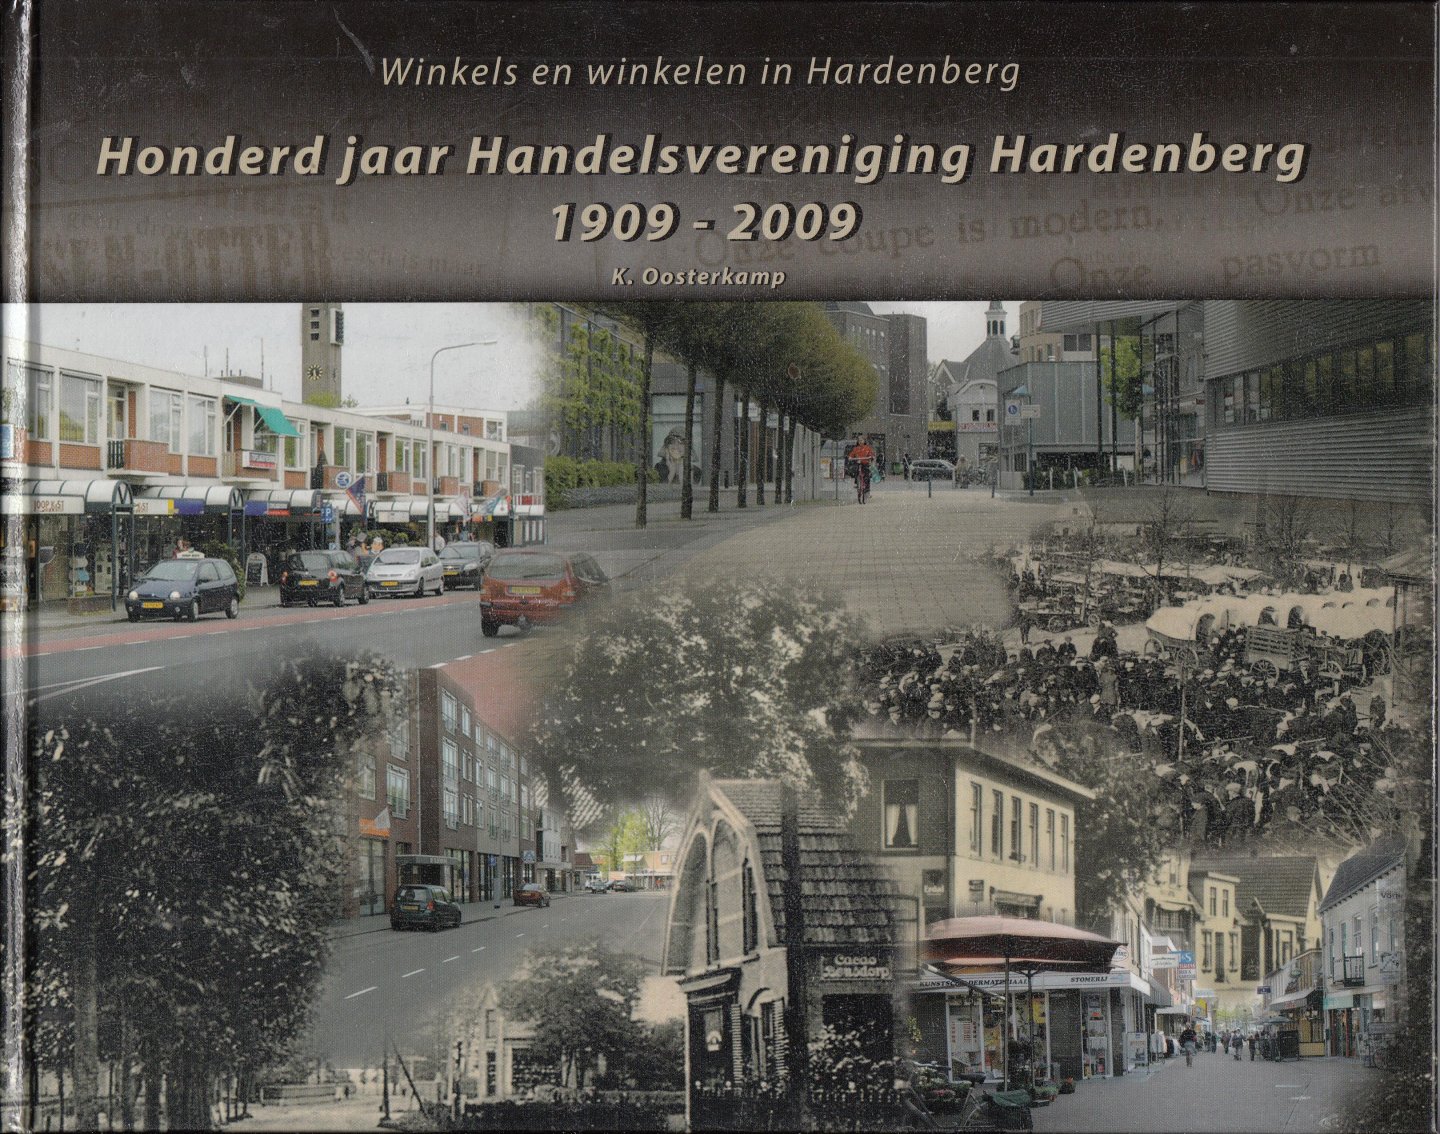 K. Oosterkamp - Honderd jaar Handelsvereniging Hardenberg 1909 - 2009 / Winkels en winkelen in Hardenberg